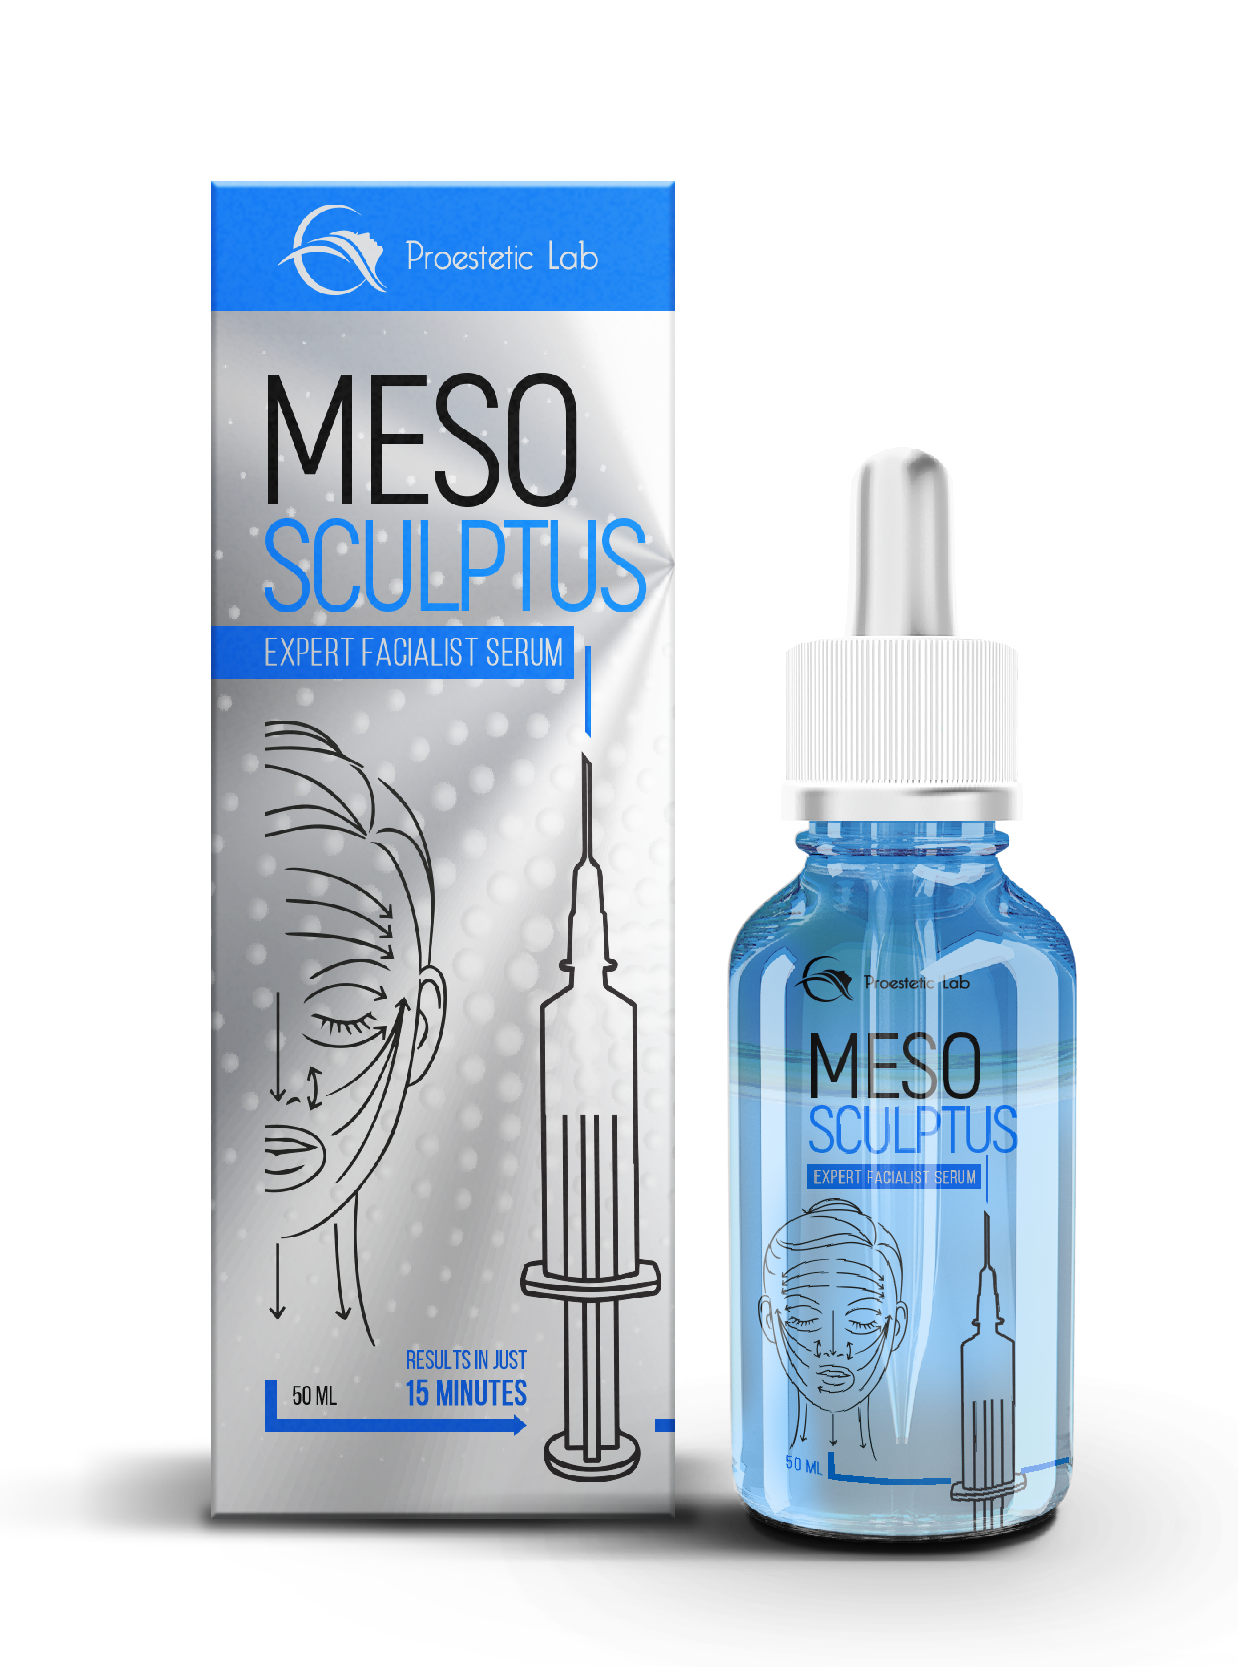 Meso Sculptus Expert Facialist Serum – Results in Just 15 Minutes! Buy